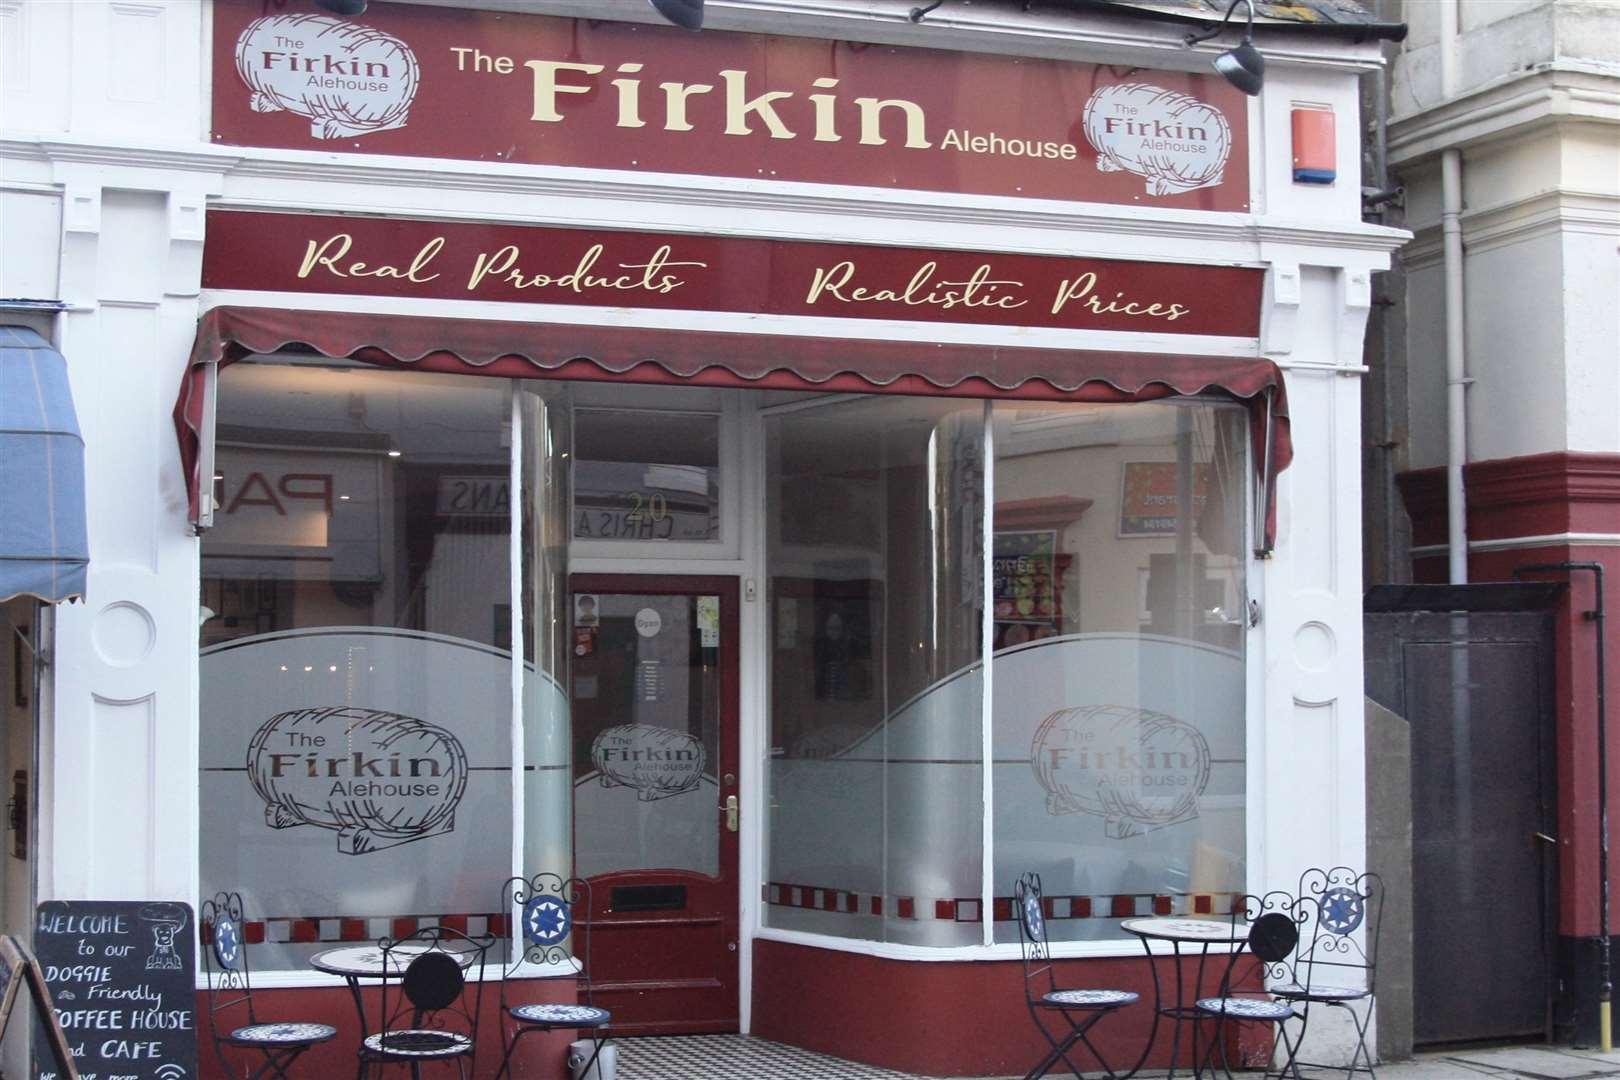 The Firkin Alehouse micropub in Cheriton Place, Folkestone